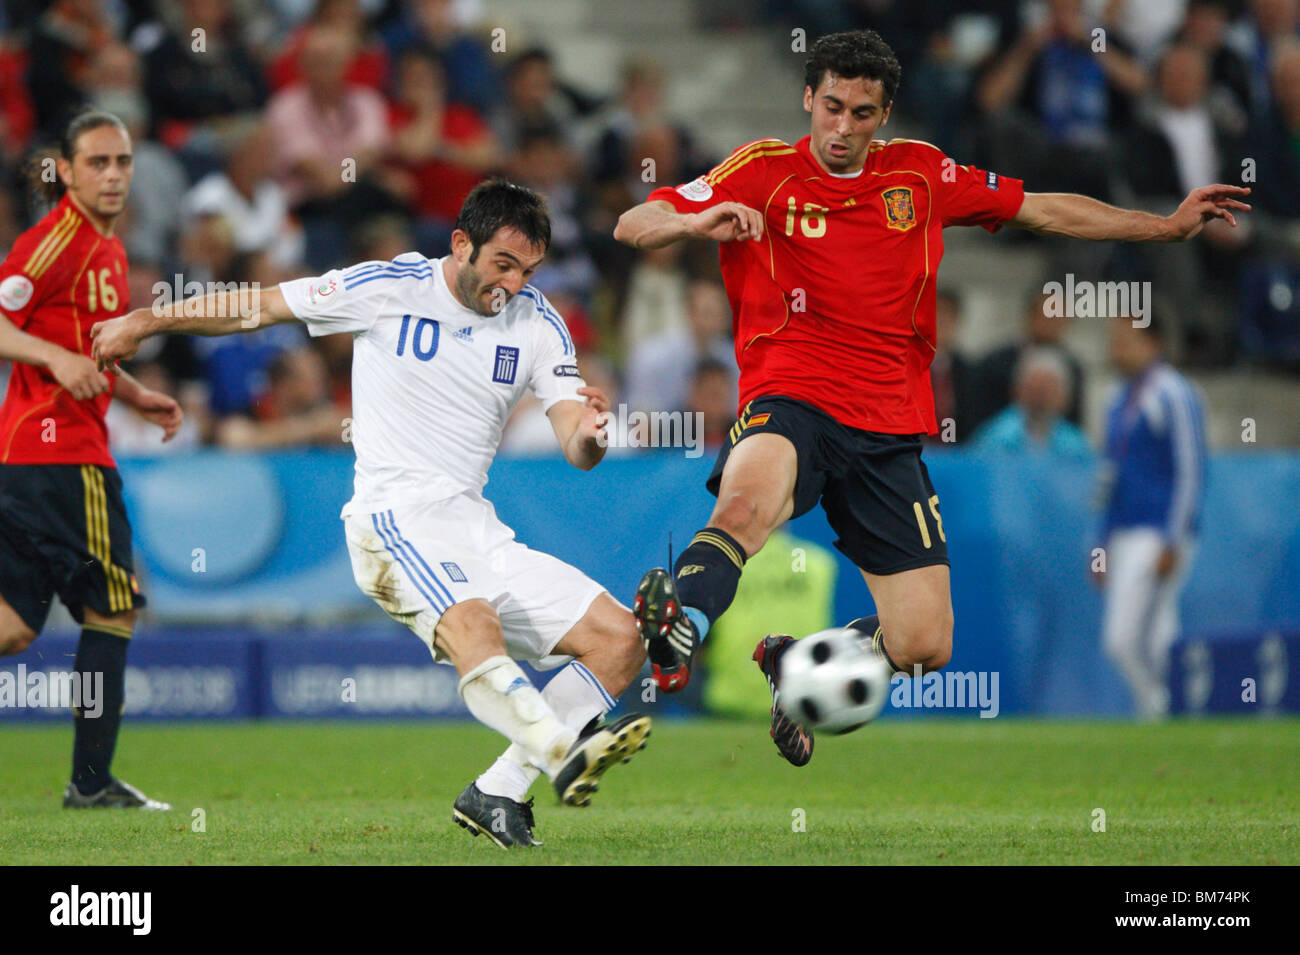 Alvaro Arbeloa of Spain (r) tries to block a kick from Giorgos Karagounis of Greece (l) during a UEFA Euro 2008 football match. Stock Photo